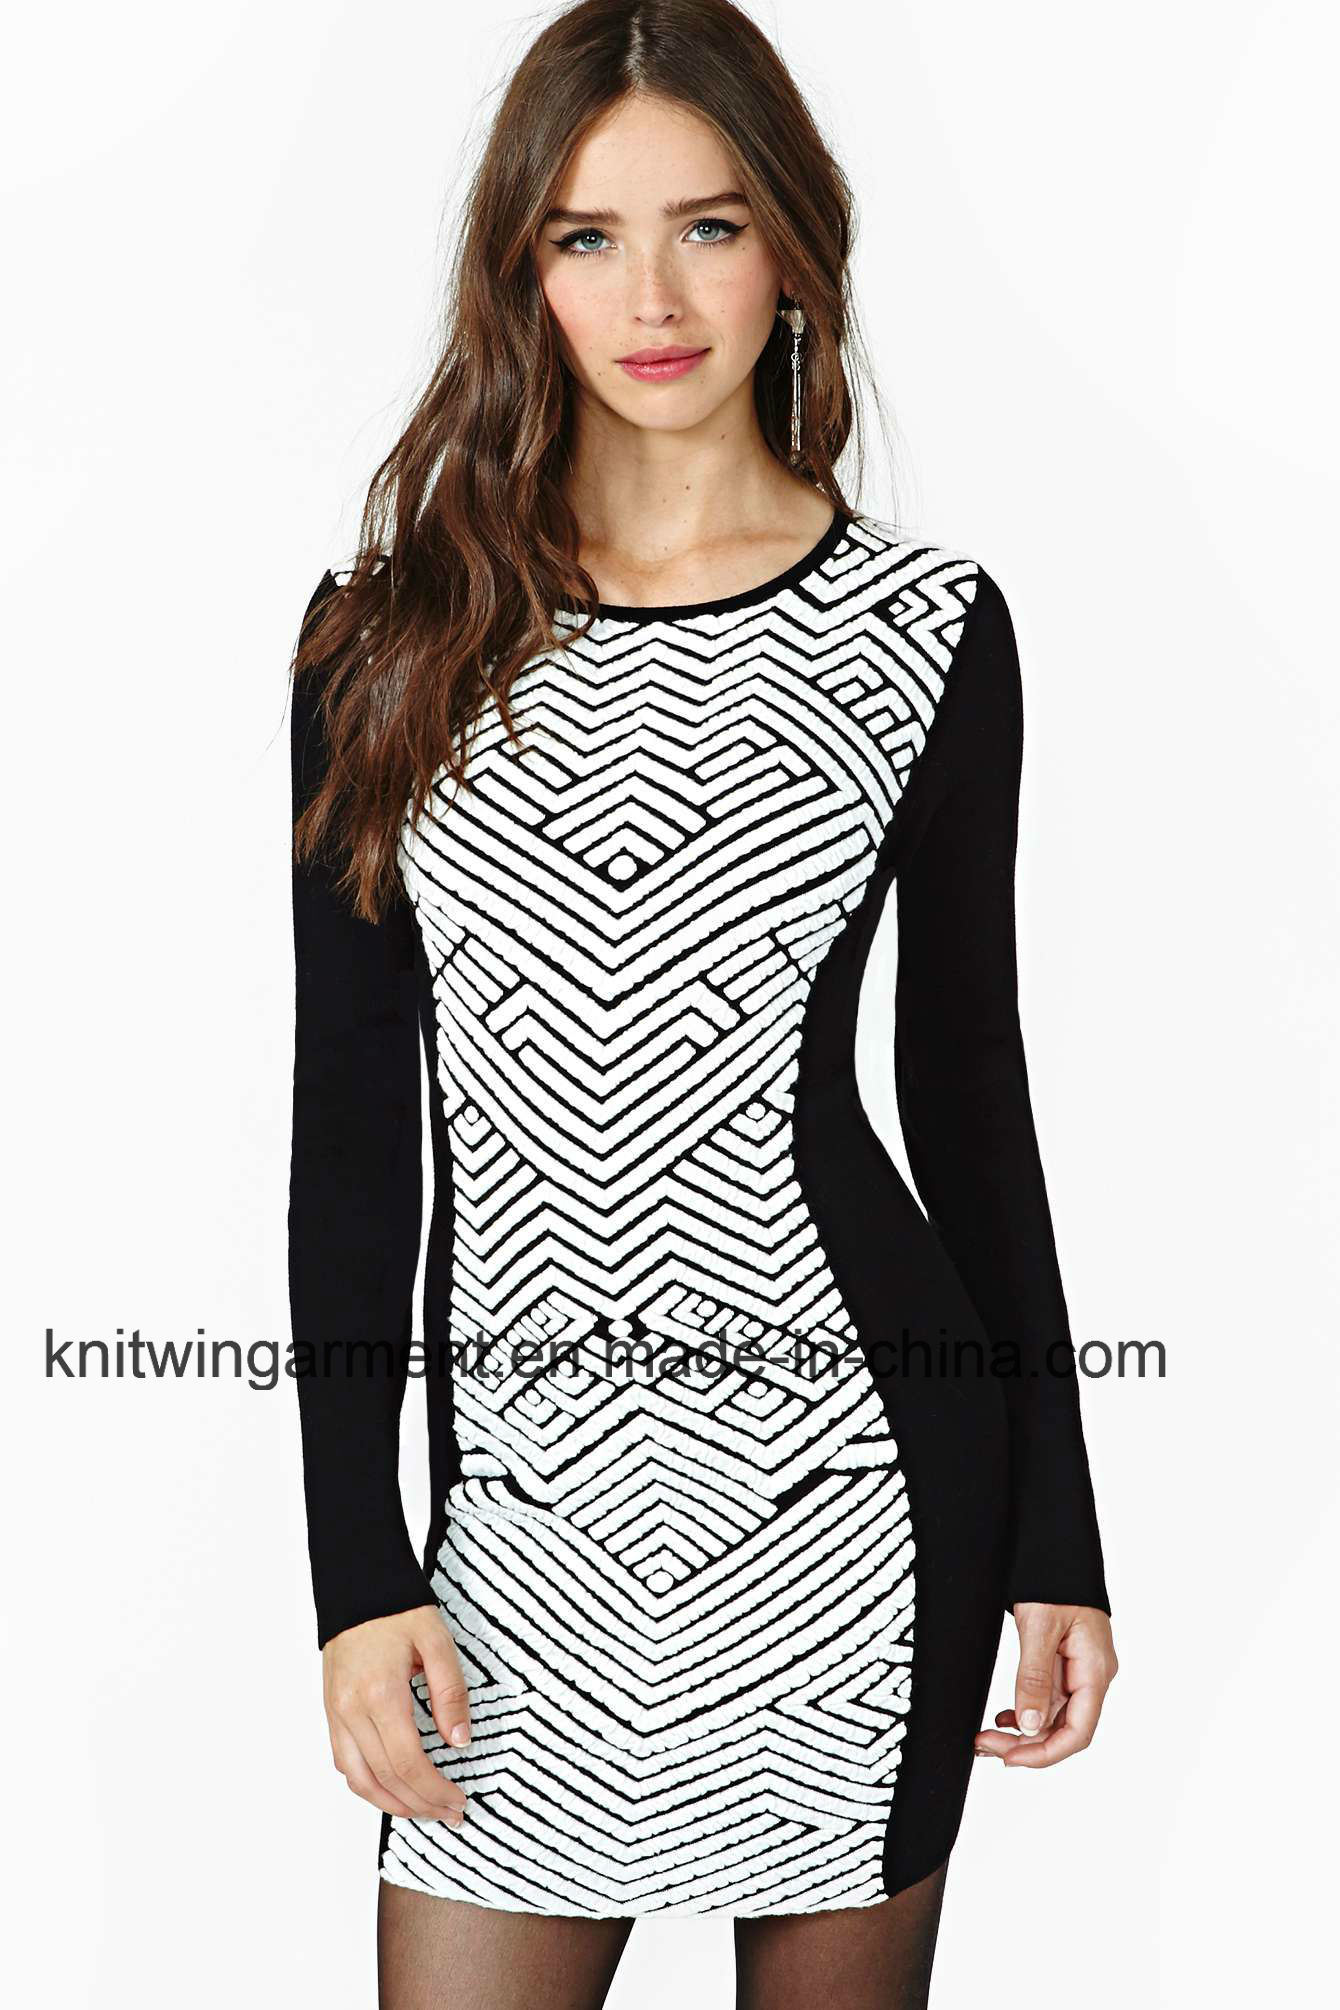 Women OEM Fashion Sweater Dress with Check Pattern (W18-513)